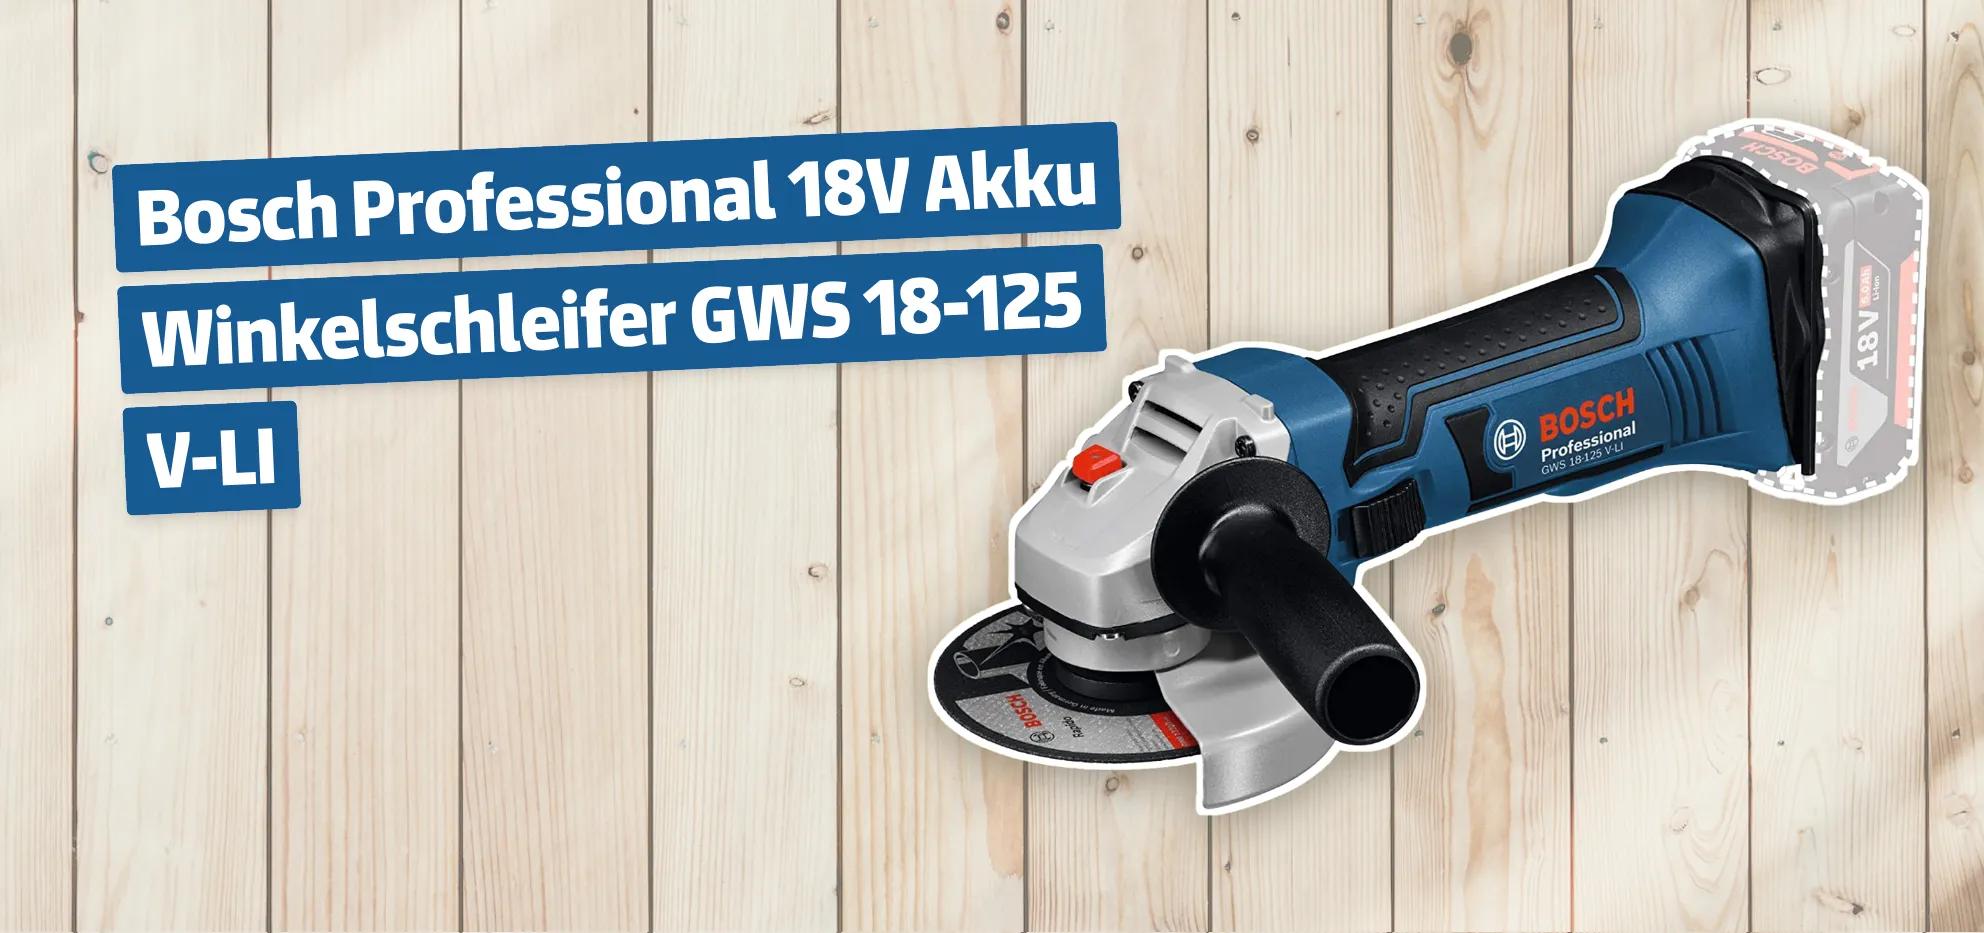 Bosch Professional 18V Akku Winkelschleifer GWS 18-125 V-LI